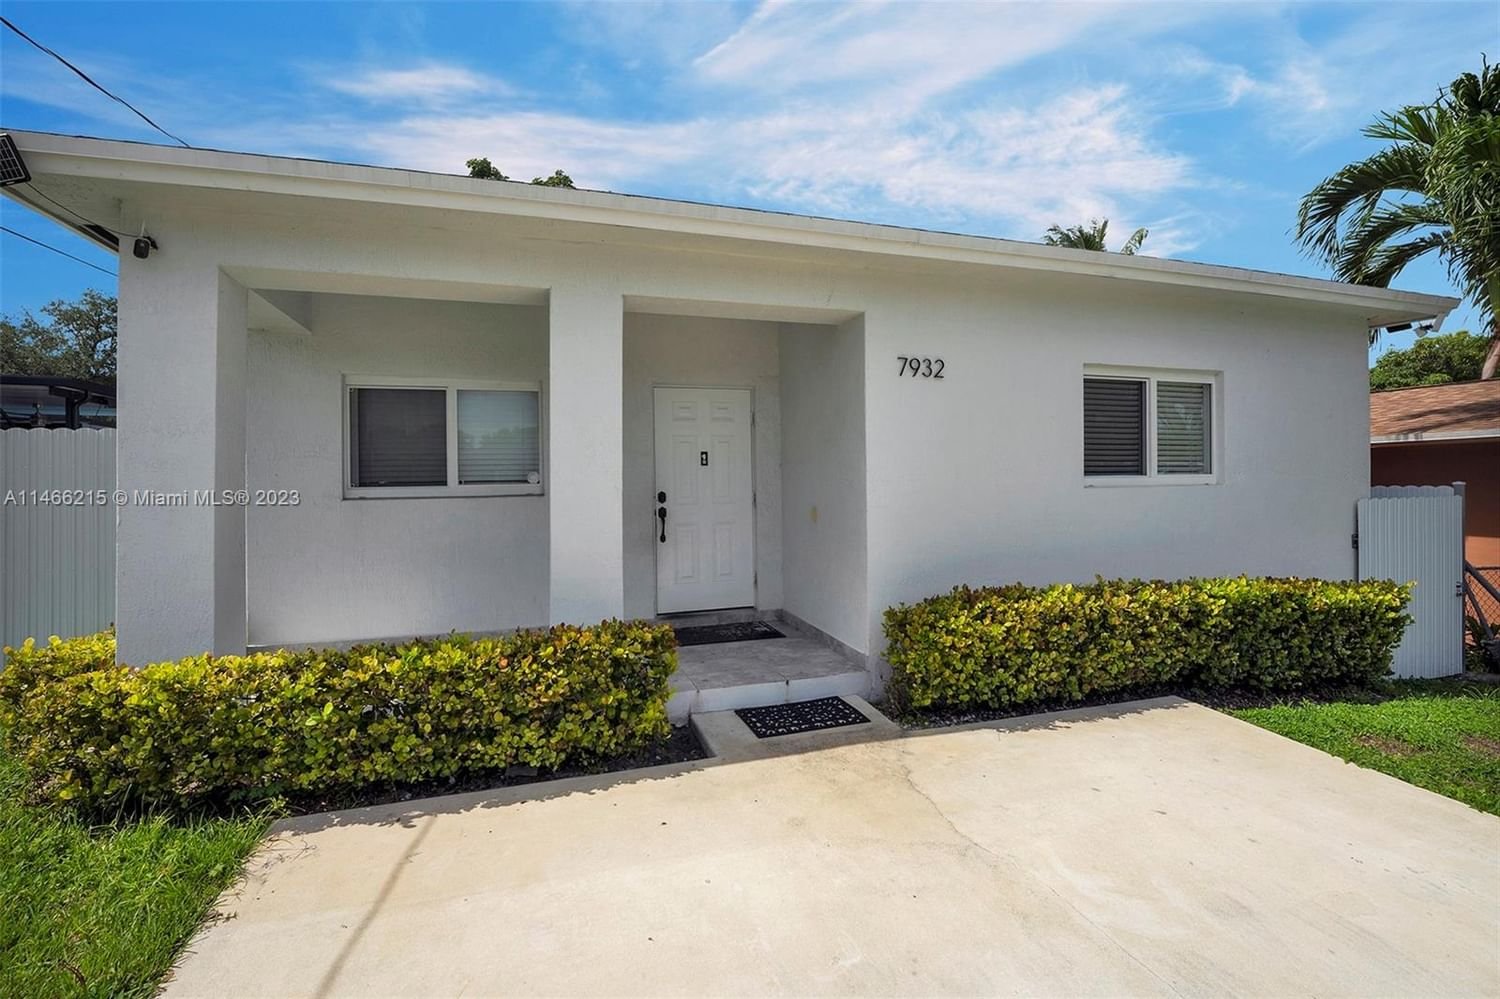 Real estate property located at 7932 14th Ct, Miami-Dade County, Miami, FL